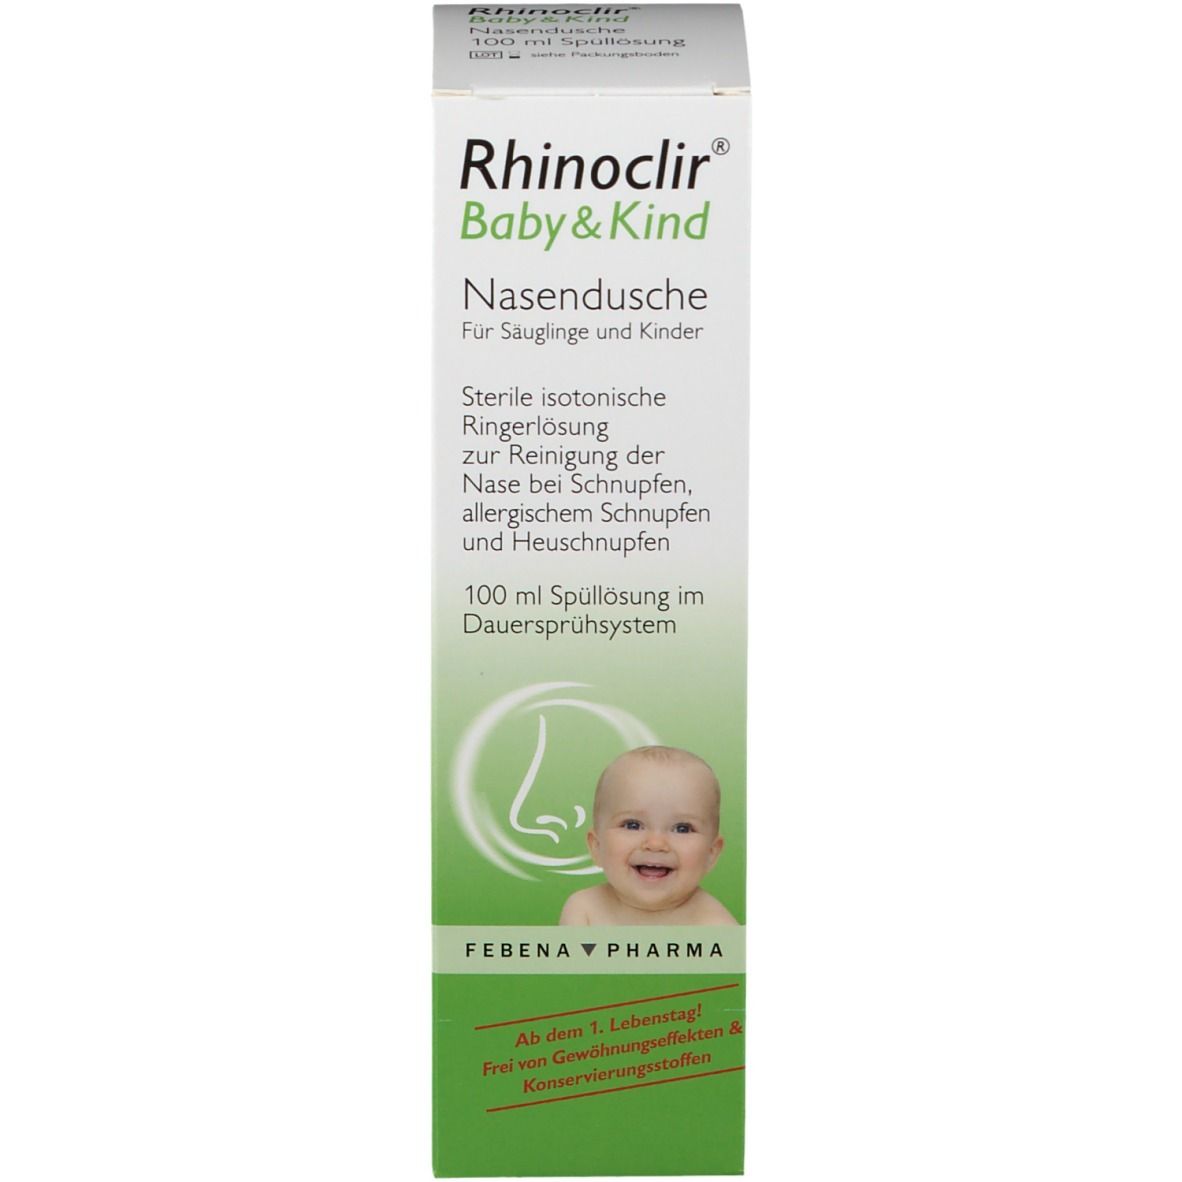 Rhinoclir® Baby & Kind Nasendusche